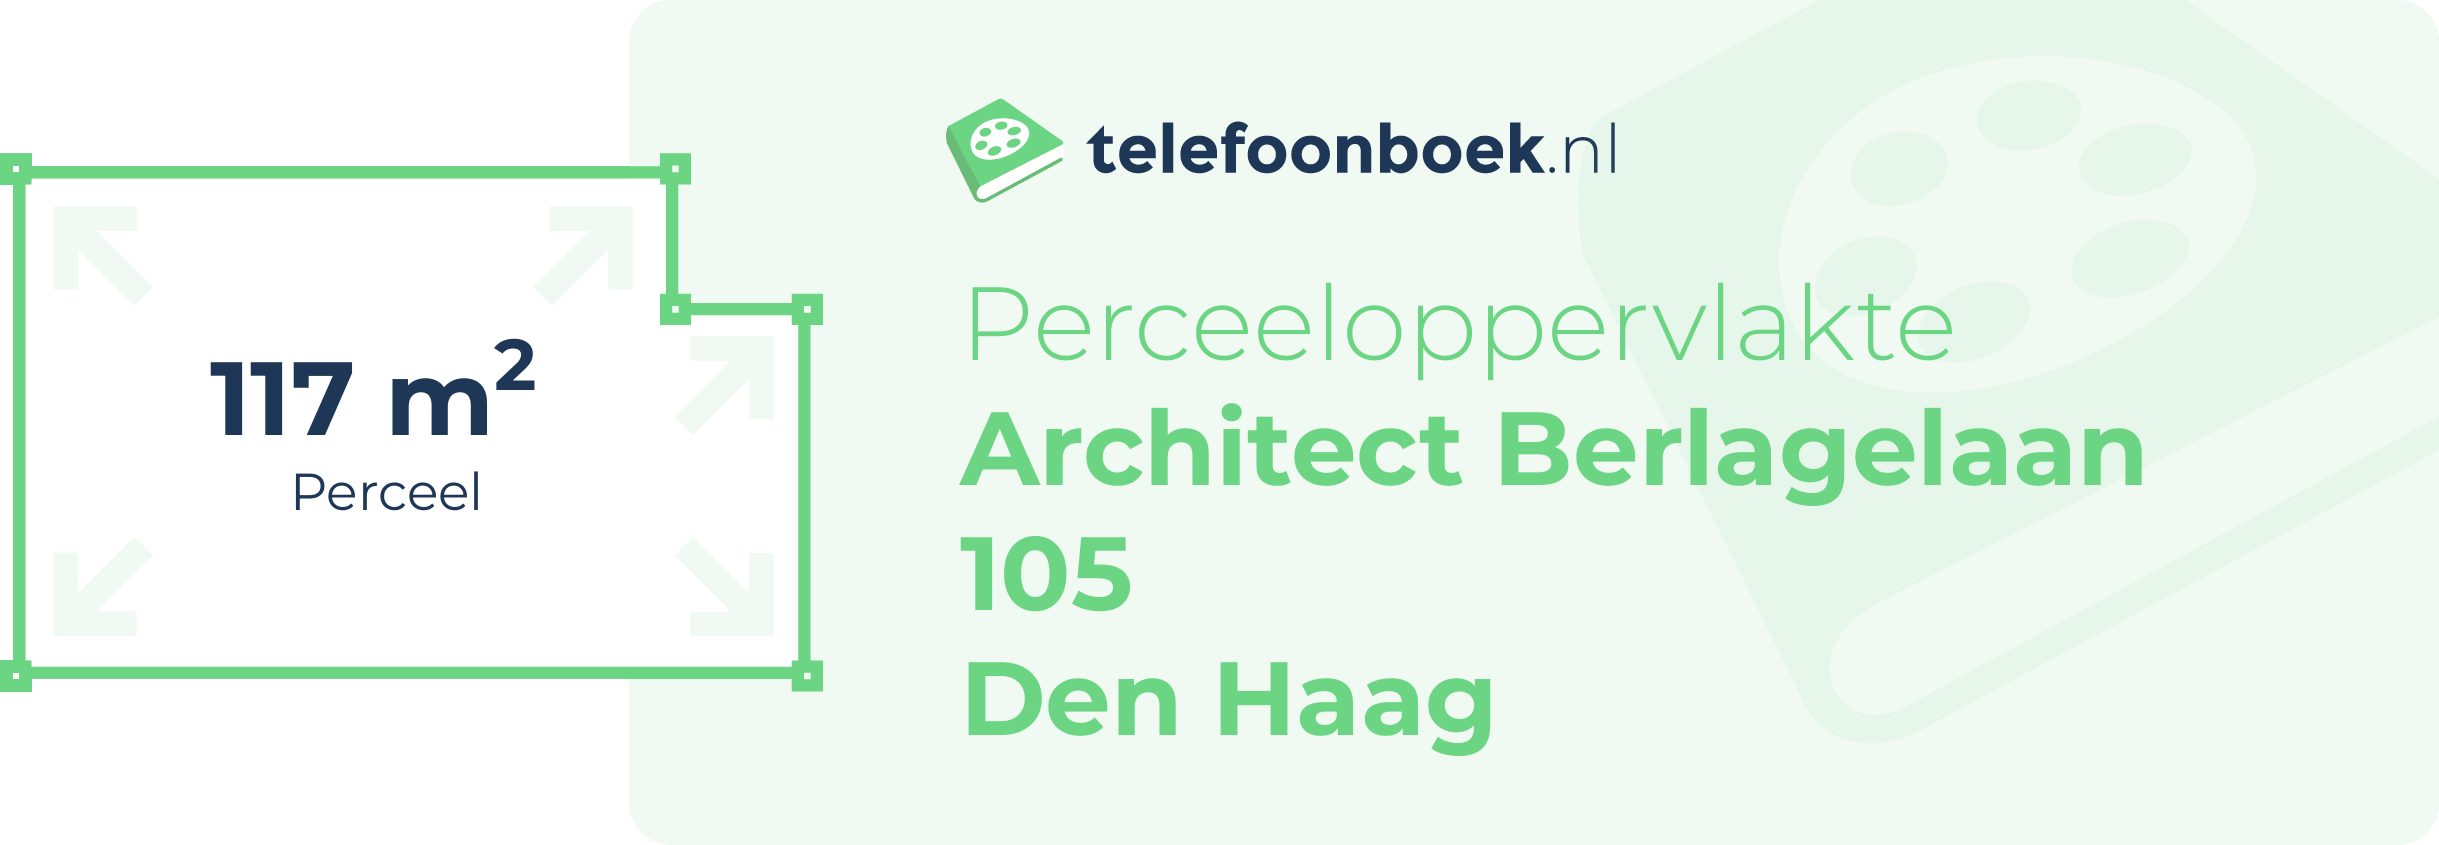 Perceeloppervlakte Architect Berlagelaan 105 Den Haag